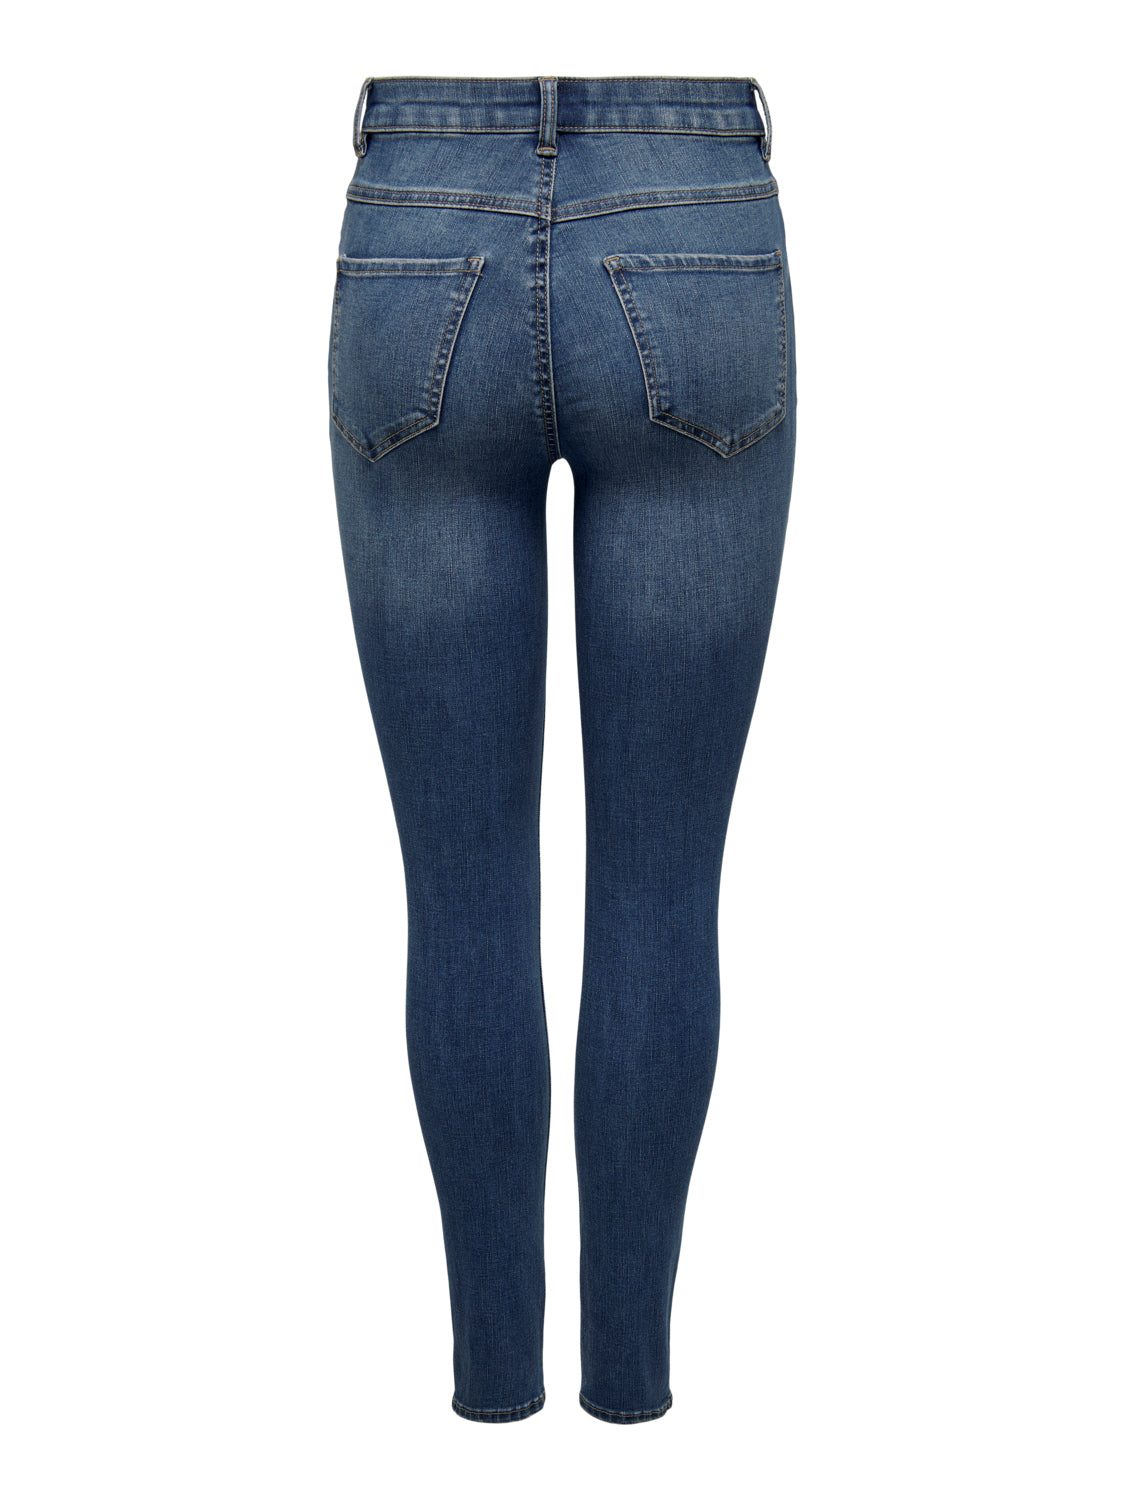 ONLROSE Jeans - Medium Blue Denim